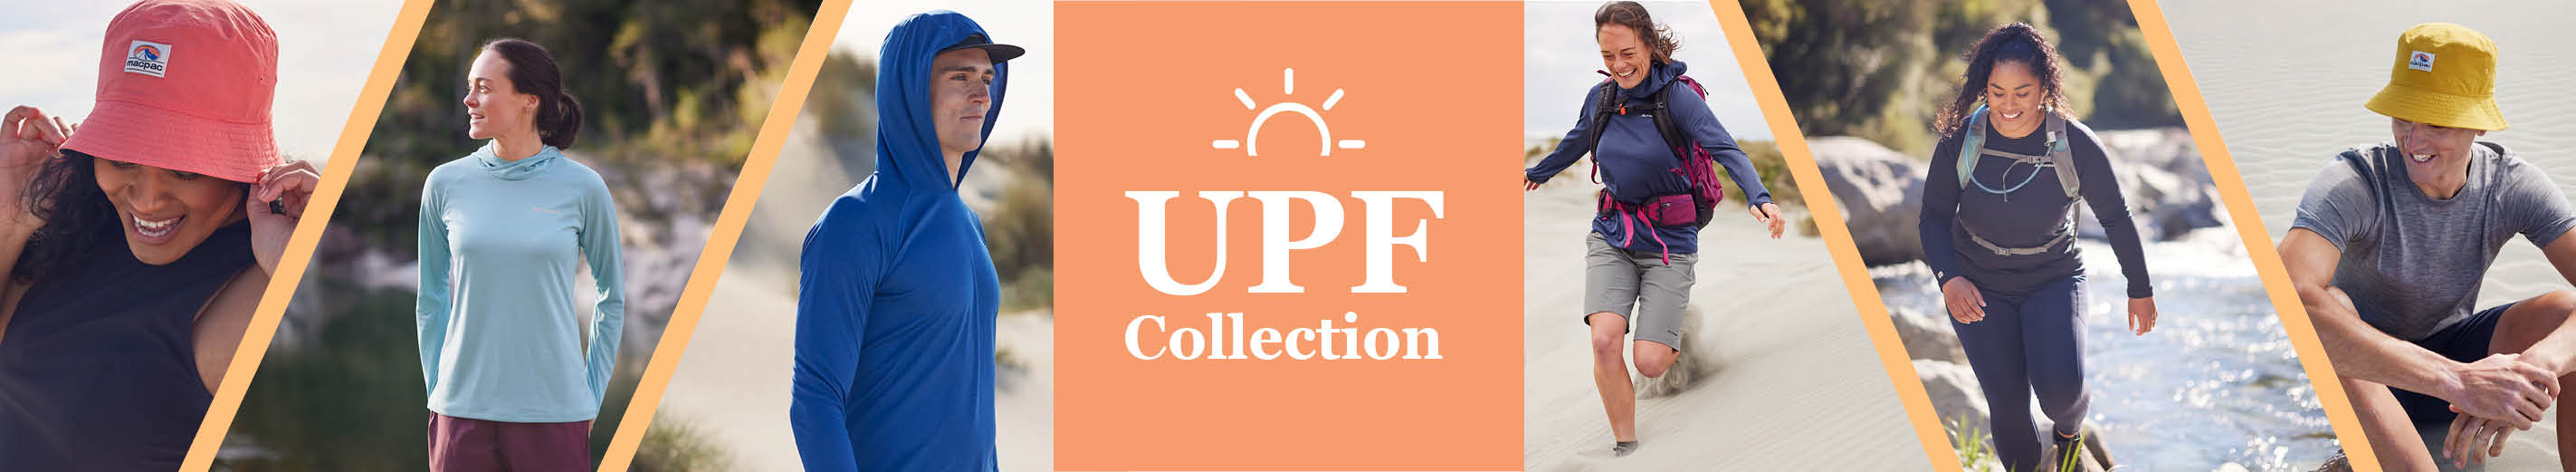 UPF Range